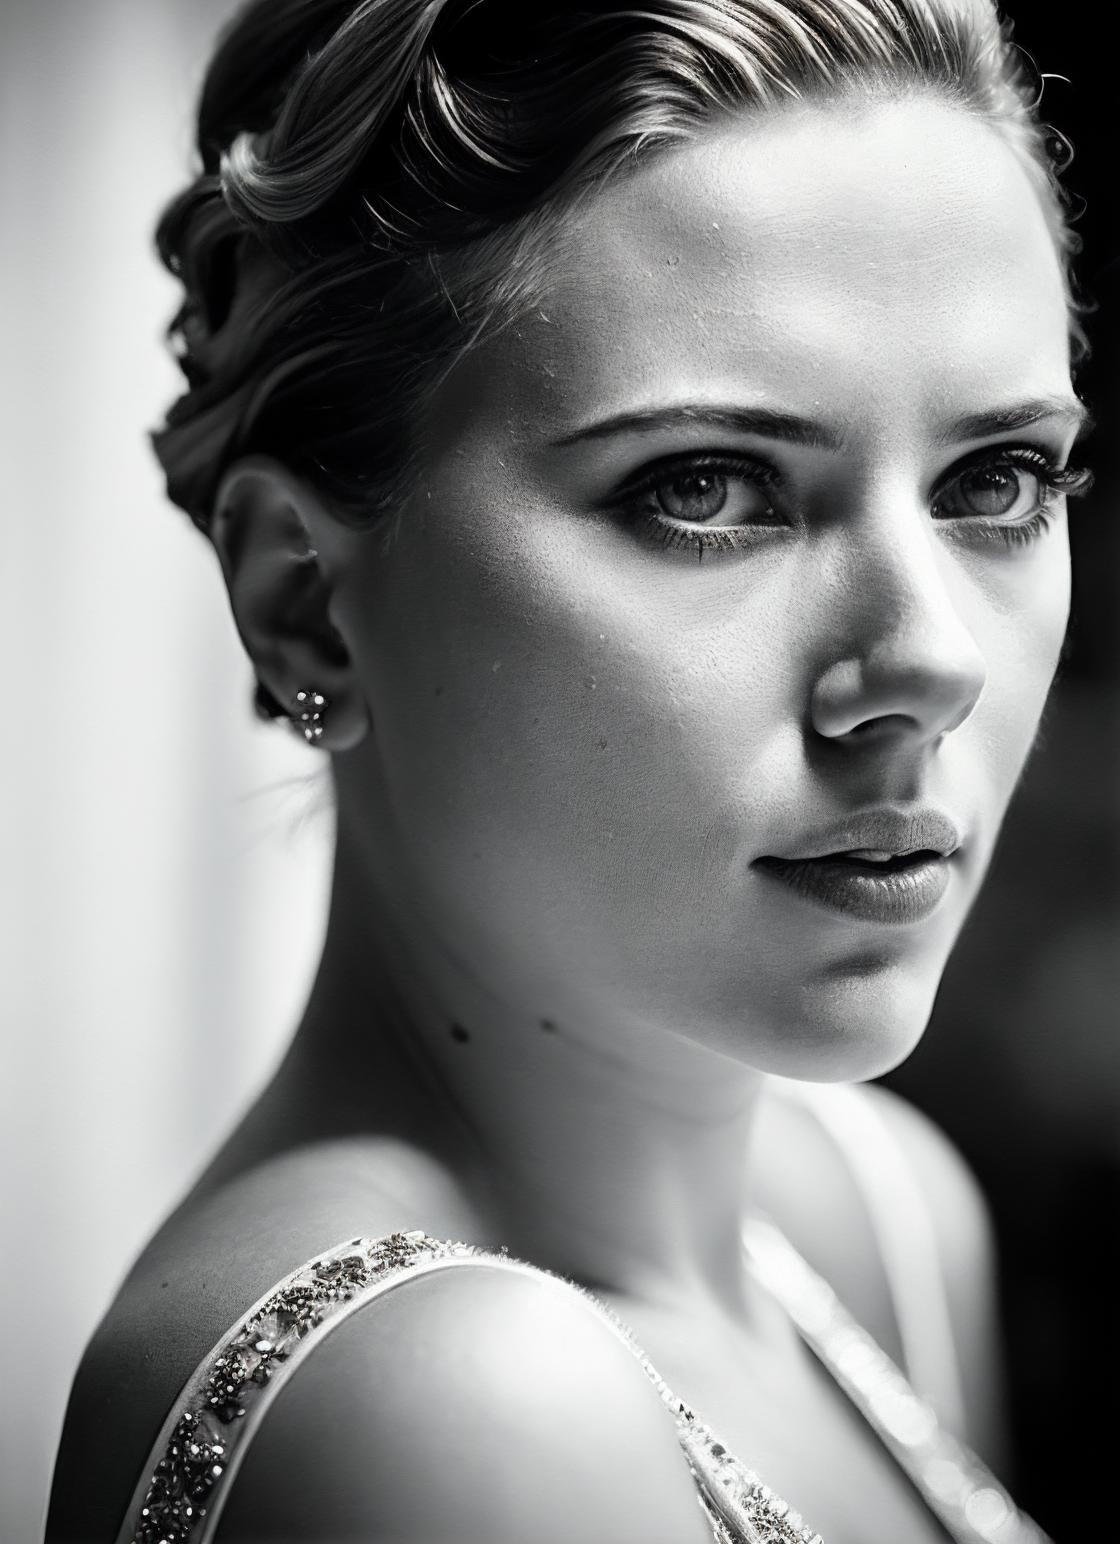 Scarlett Johansson image by malcolmrey